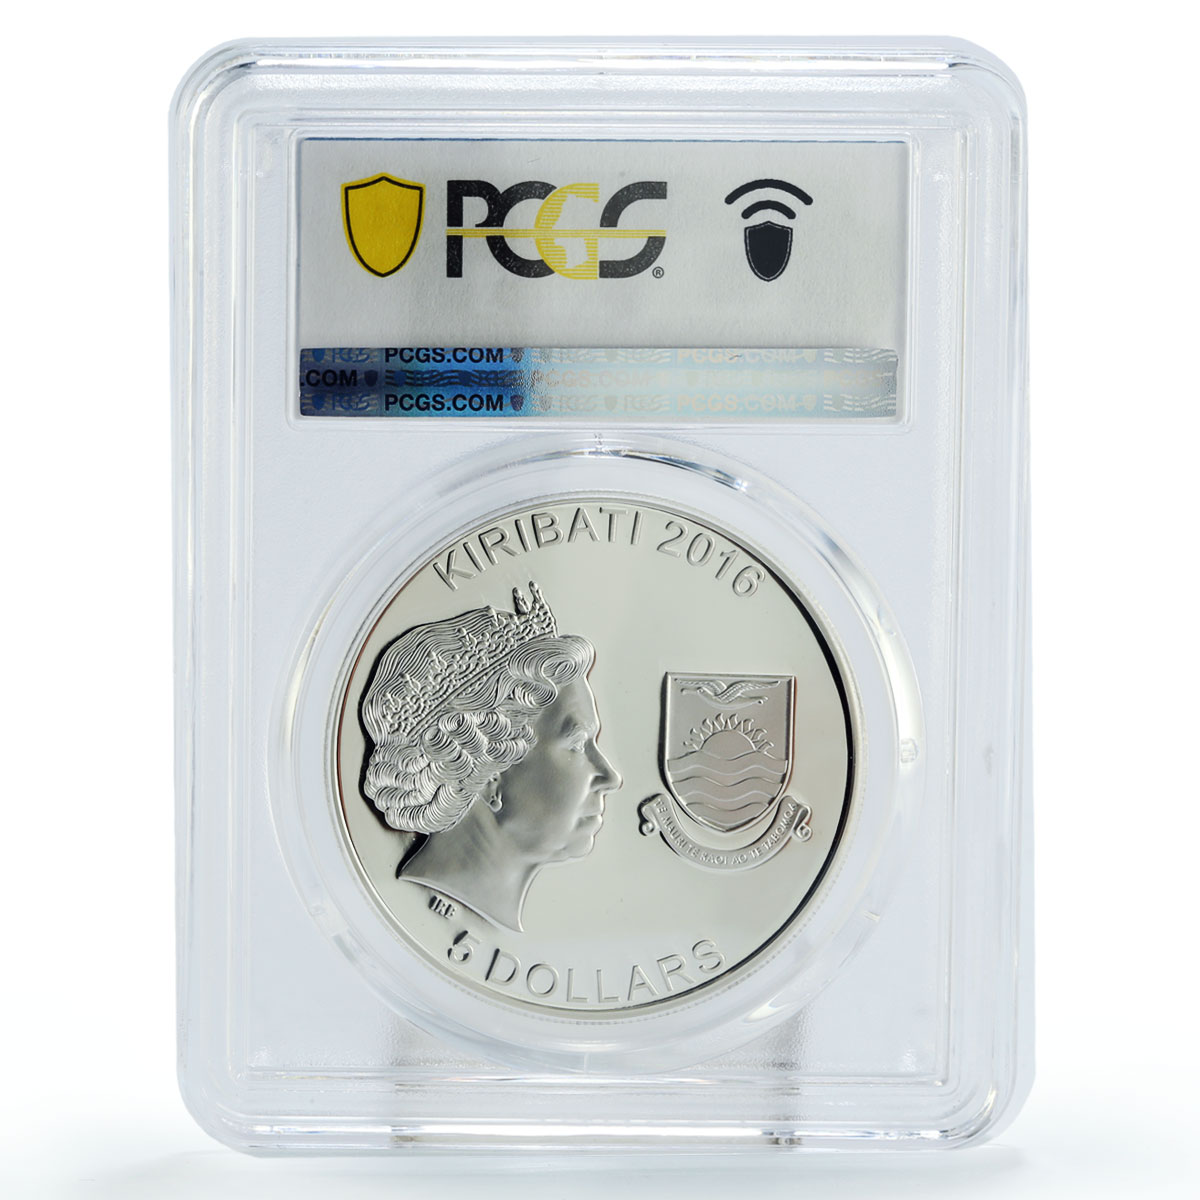 Kiribati 5 dollars Crypt Headless Horseman PR70 PCGS colored silver coin 2016